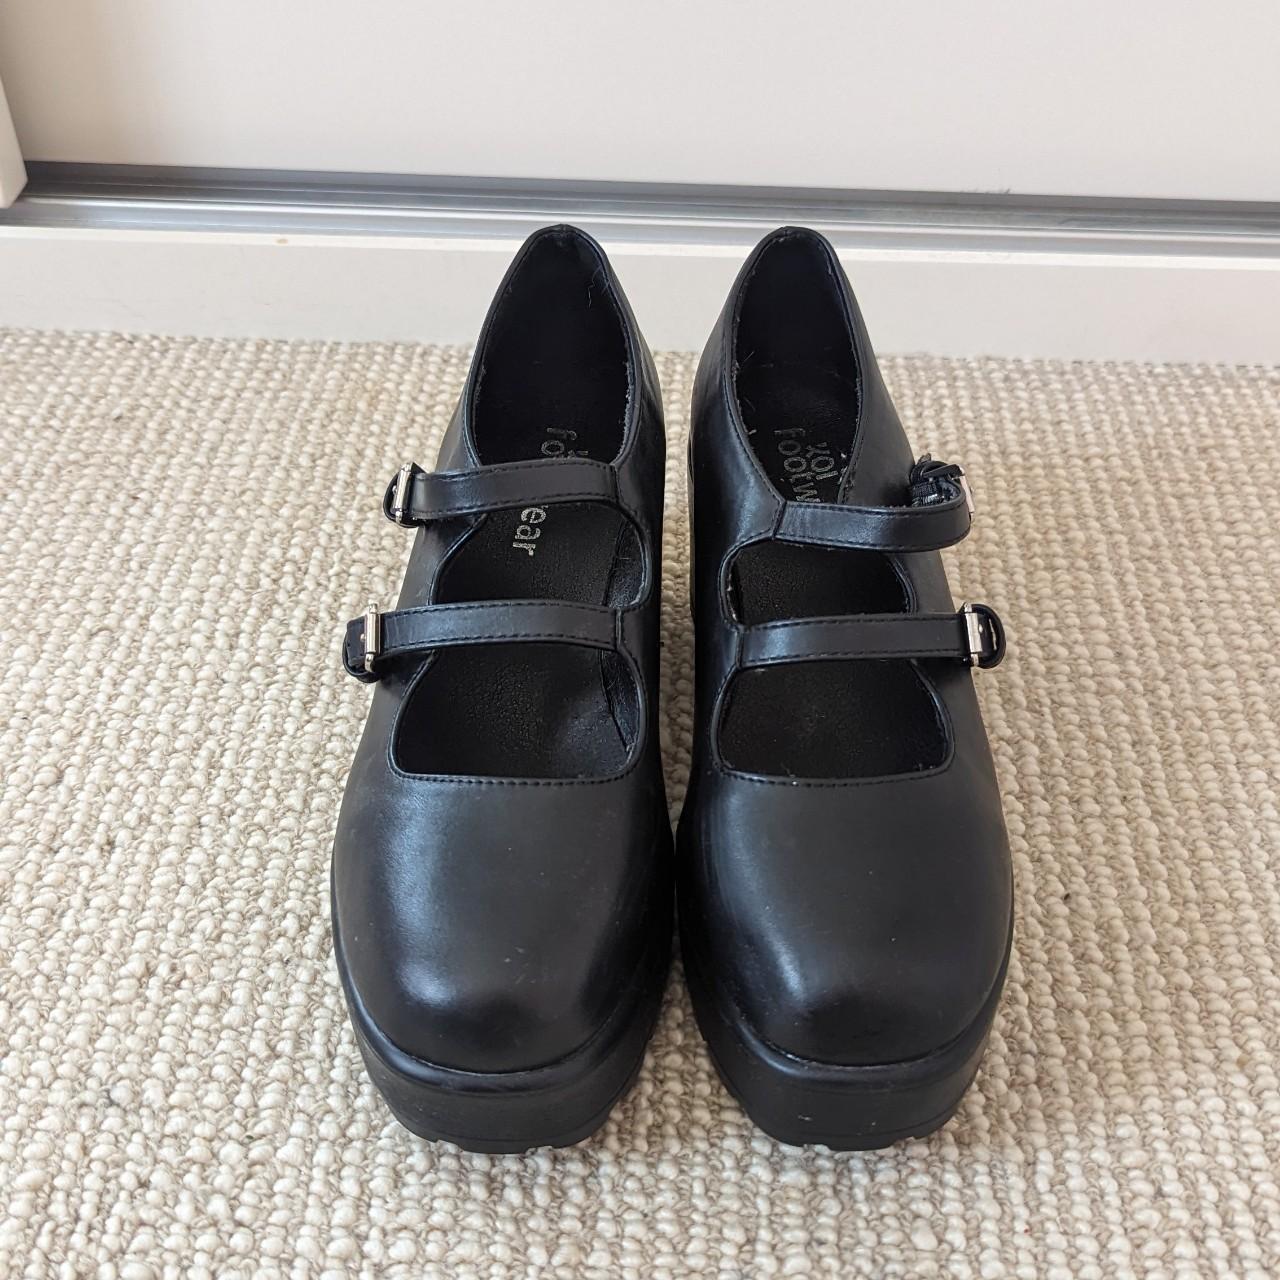 Koi Footwear Veagan Leather Platform Heeled Mary... - Depop